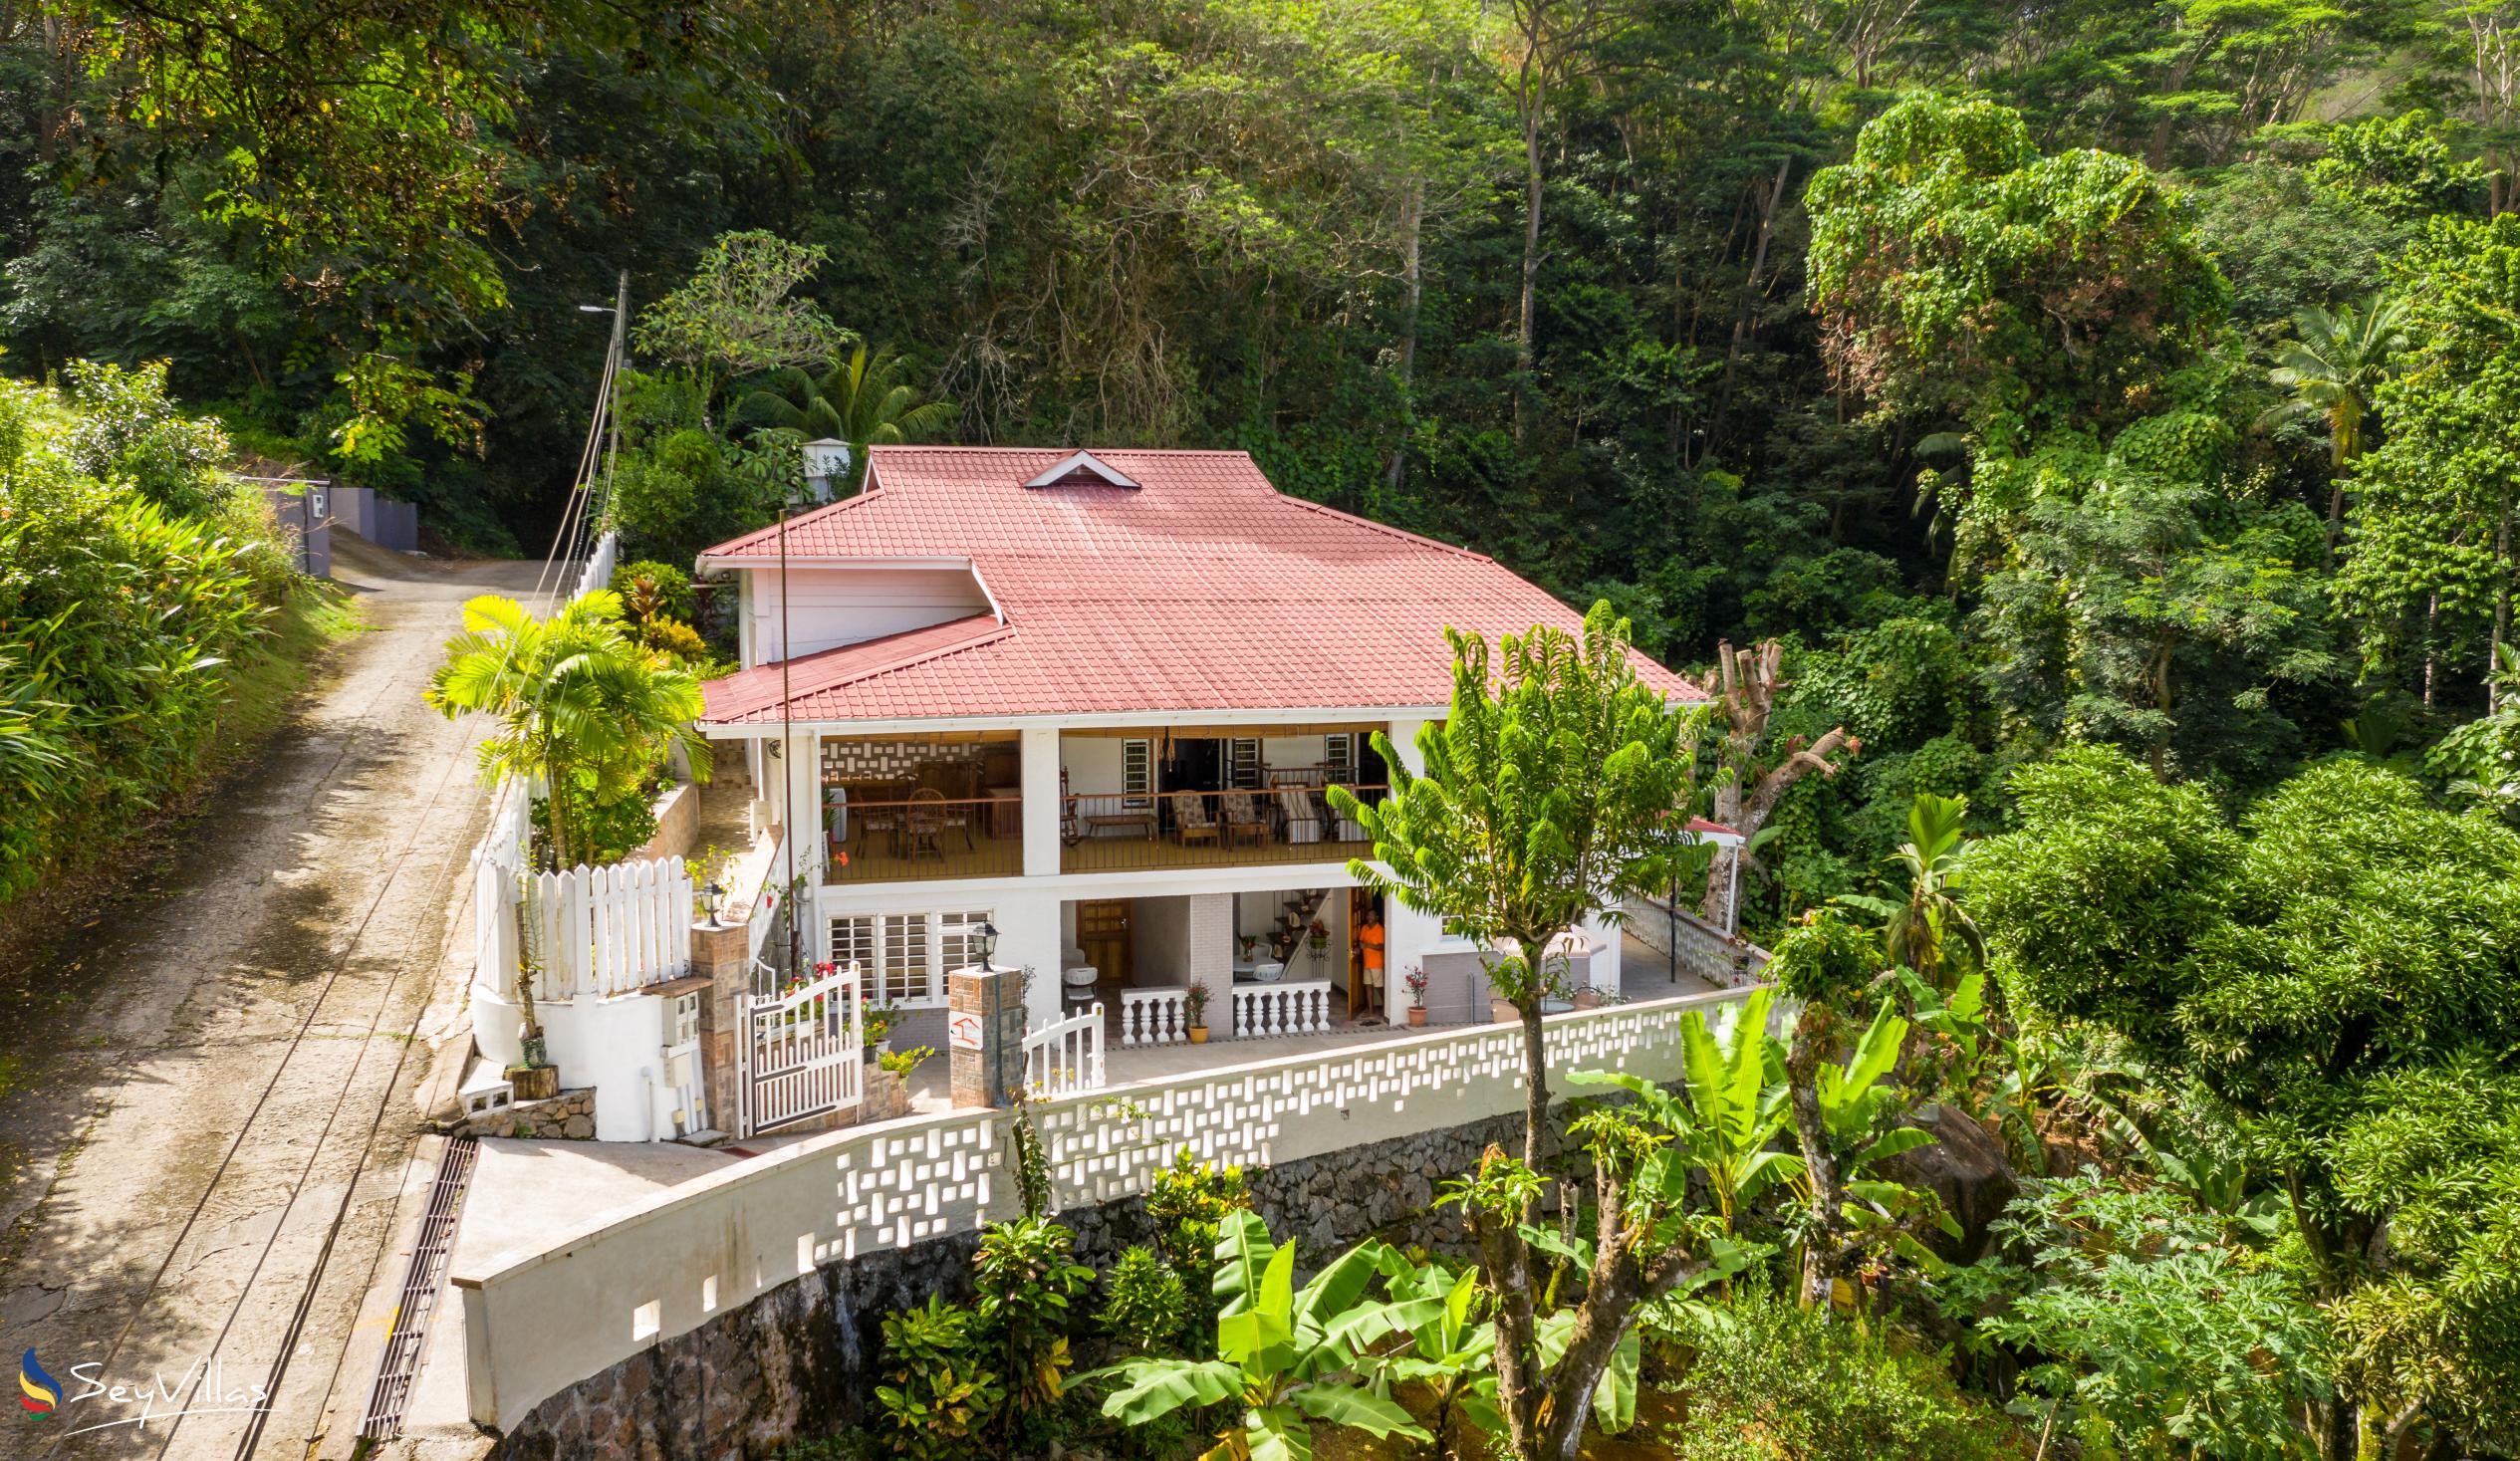 Foto 3: Jane's Serenity Guesthouse - Aussenbereich - Mahé (Seychellen)